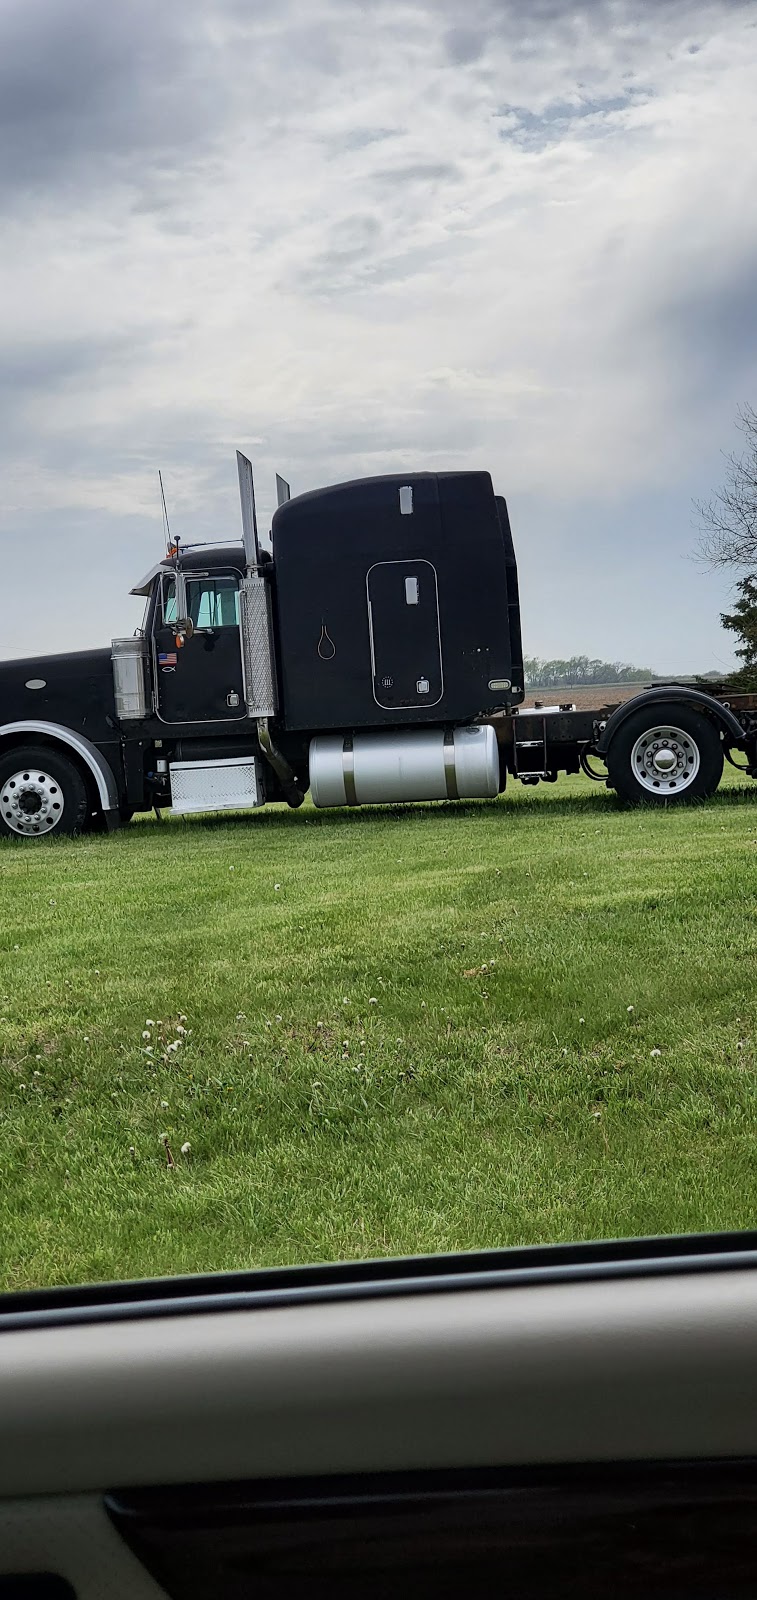 Buhrs Trucking Inc | 10372 NE-41, Adams, NE 68301, USA | Phone: (402) 988-4185